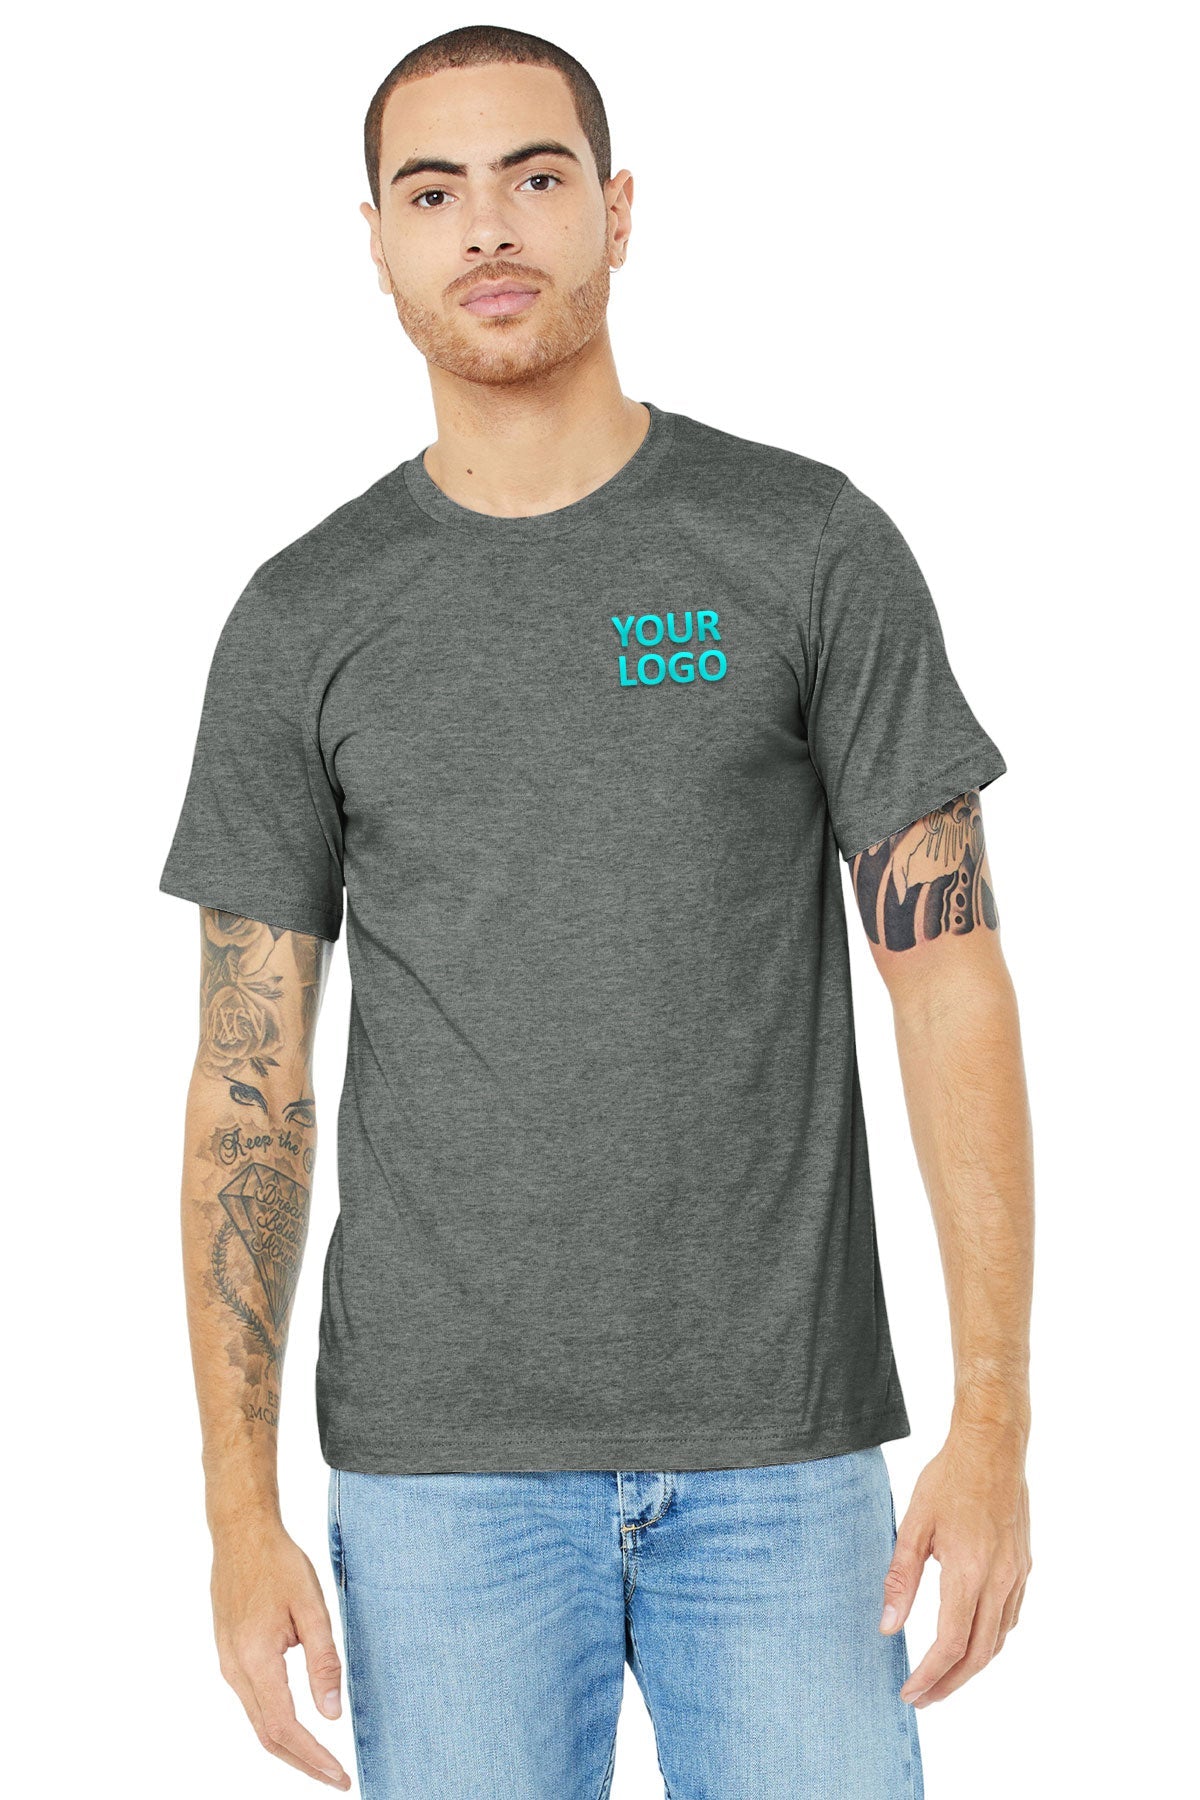 bella + canvas unisex jersey short sleeve t-shirt 3001cvc deep heather